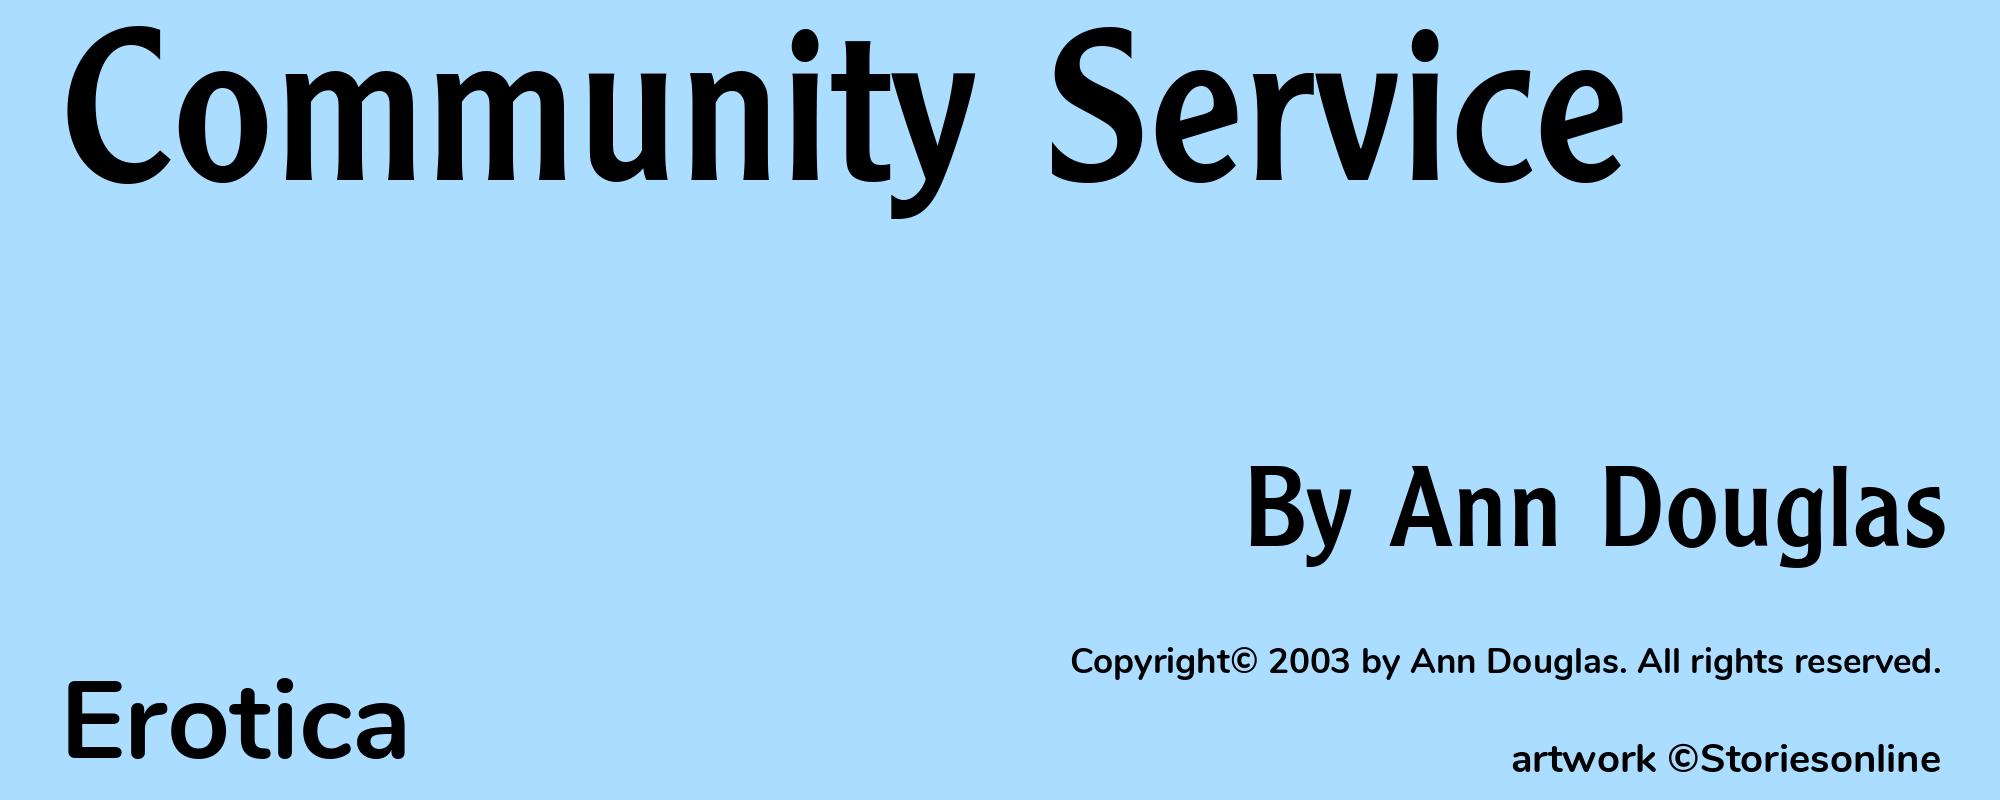 Community Service - Cover